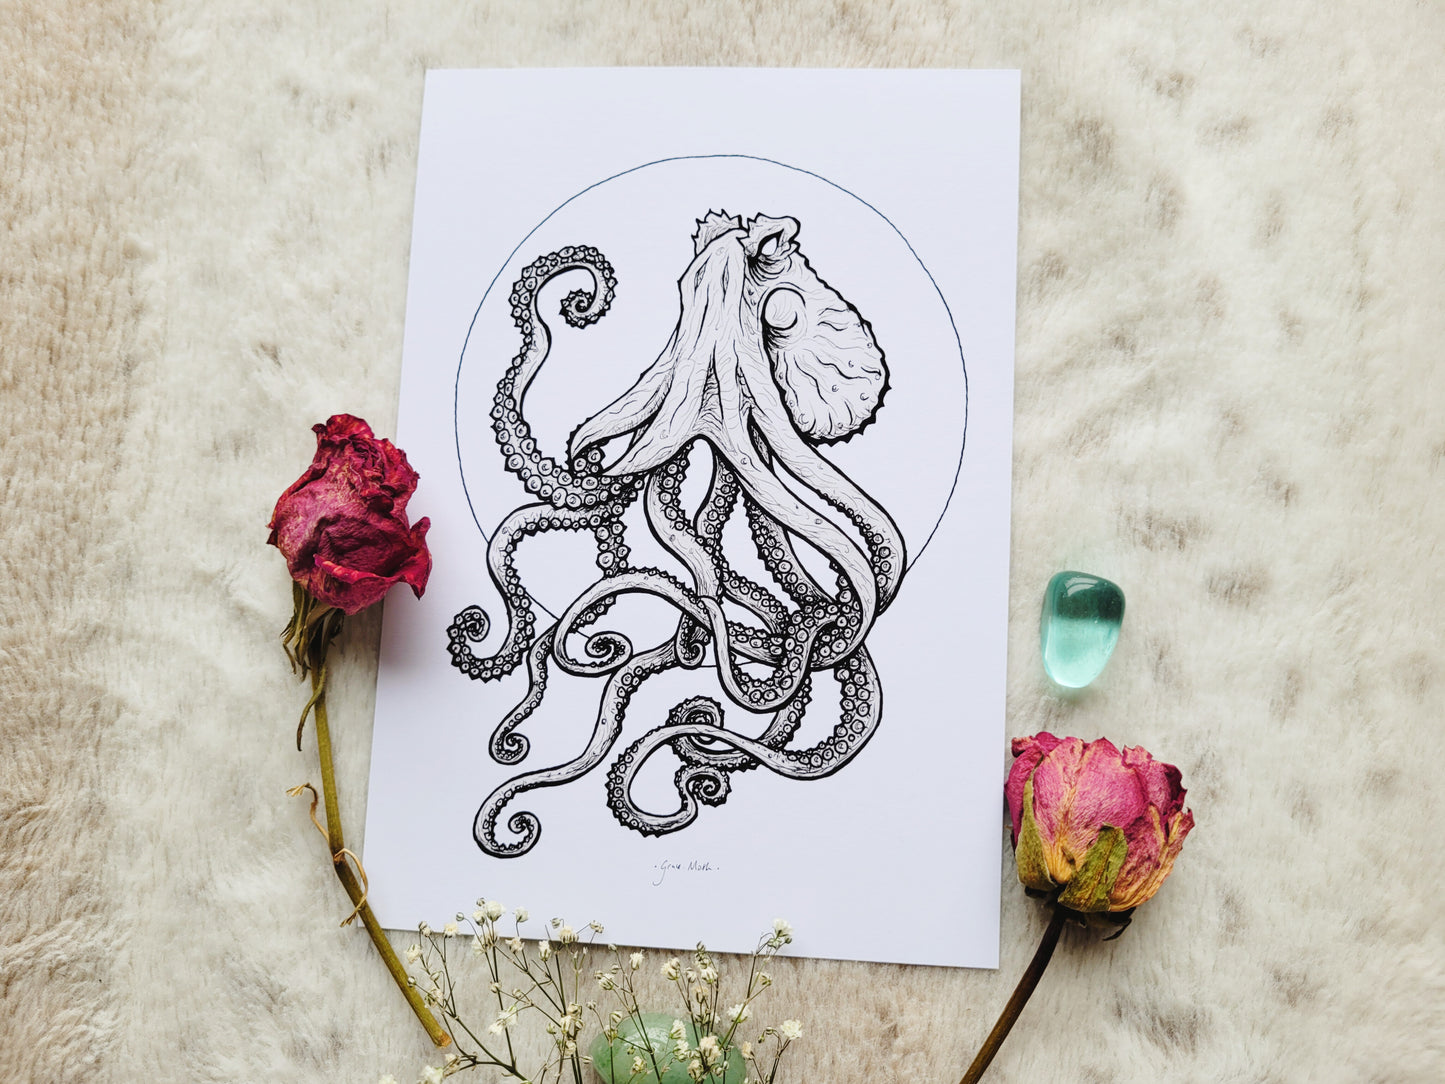 Octopus - A5 art print by Grace Moth - 5.8 x 8.3